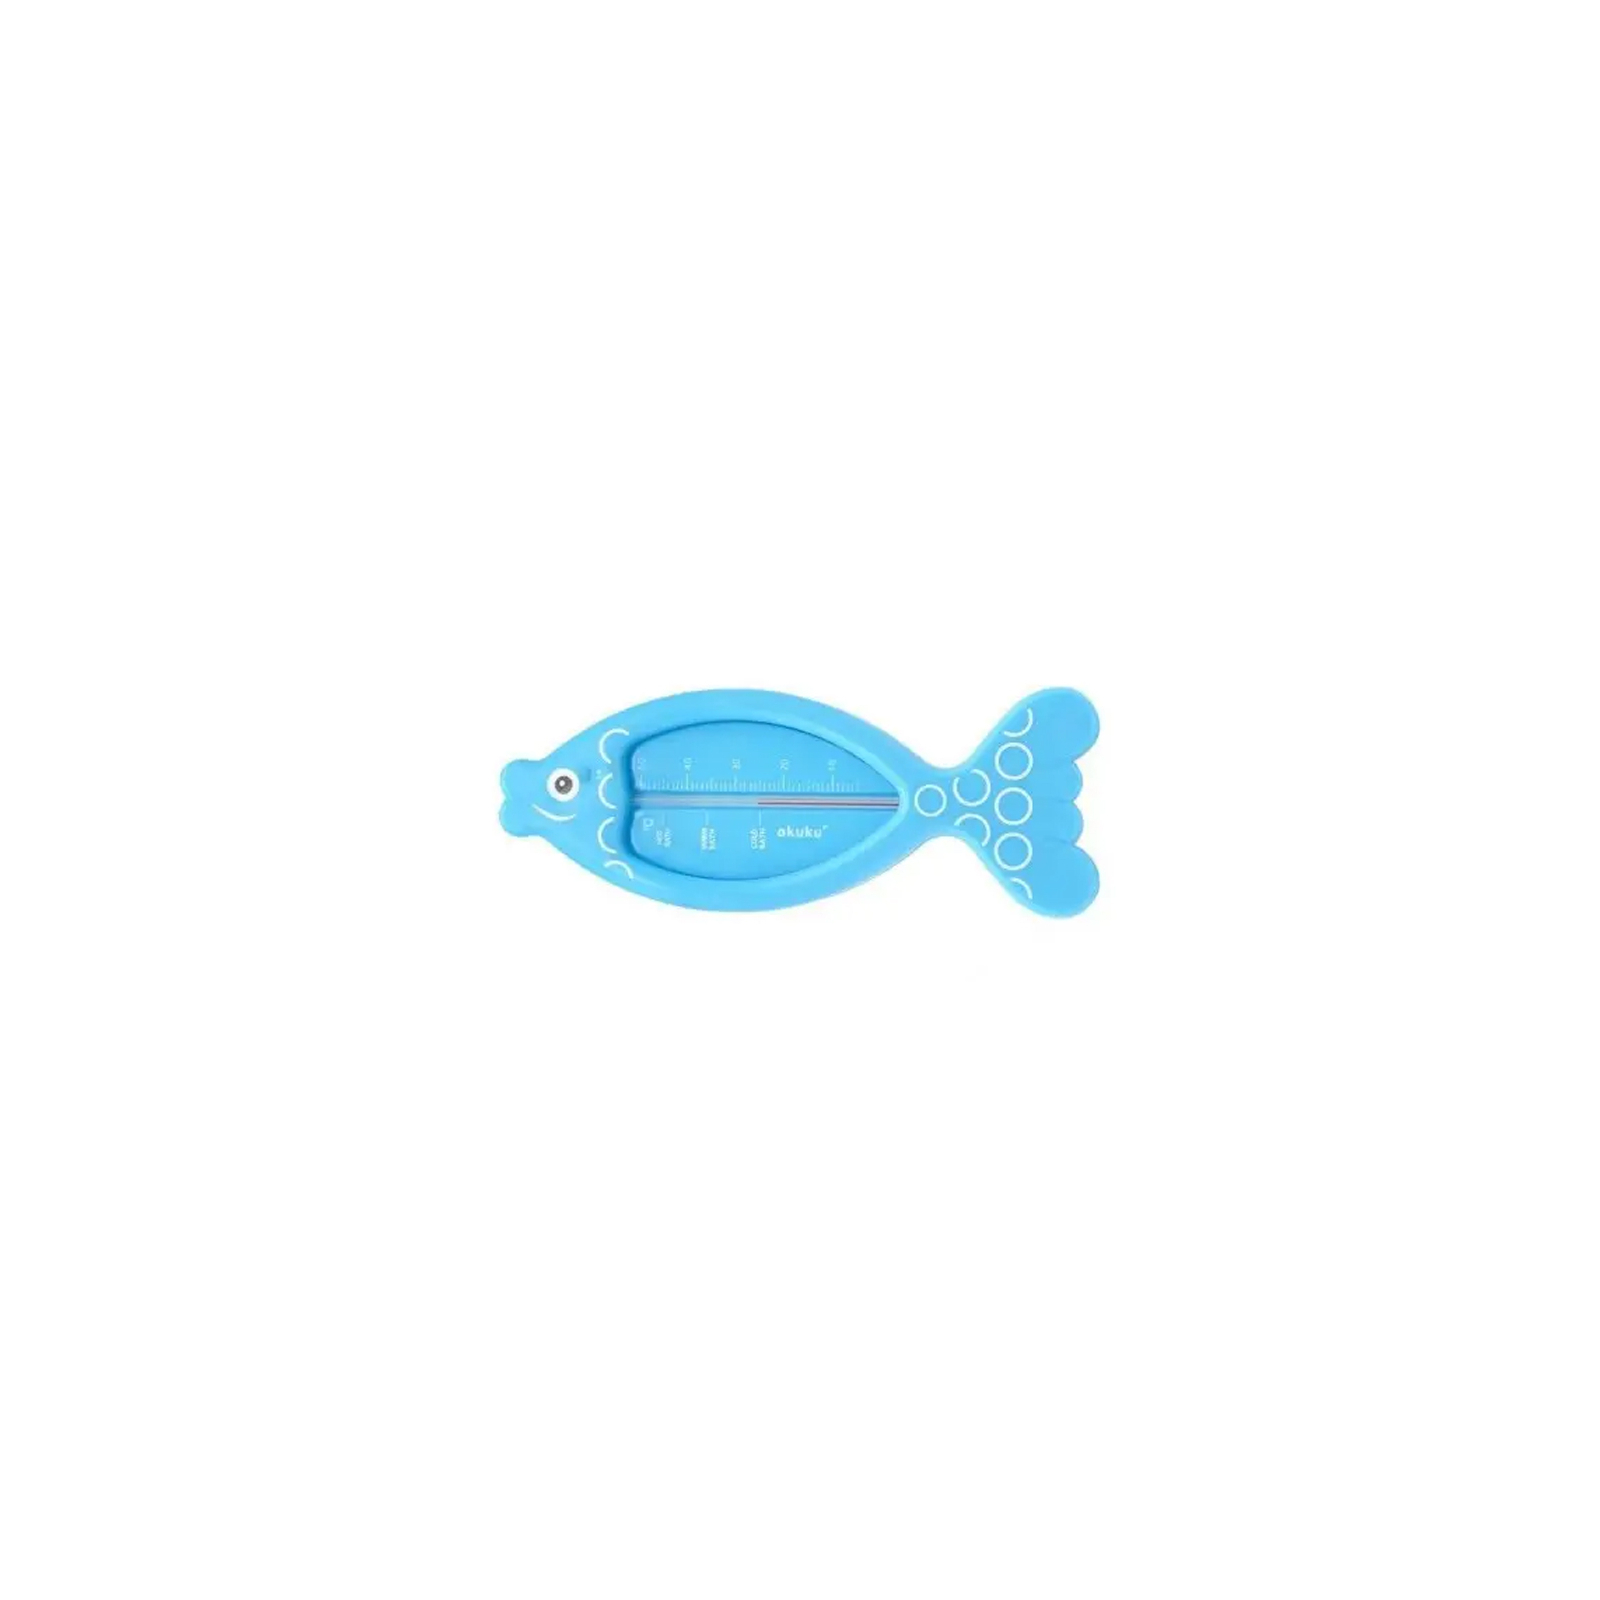 Термометр для воды Akuku Рыба Голубая (A0395)